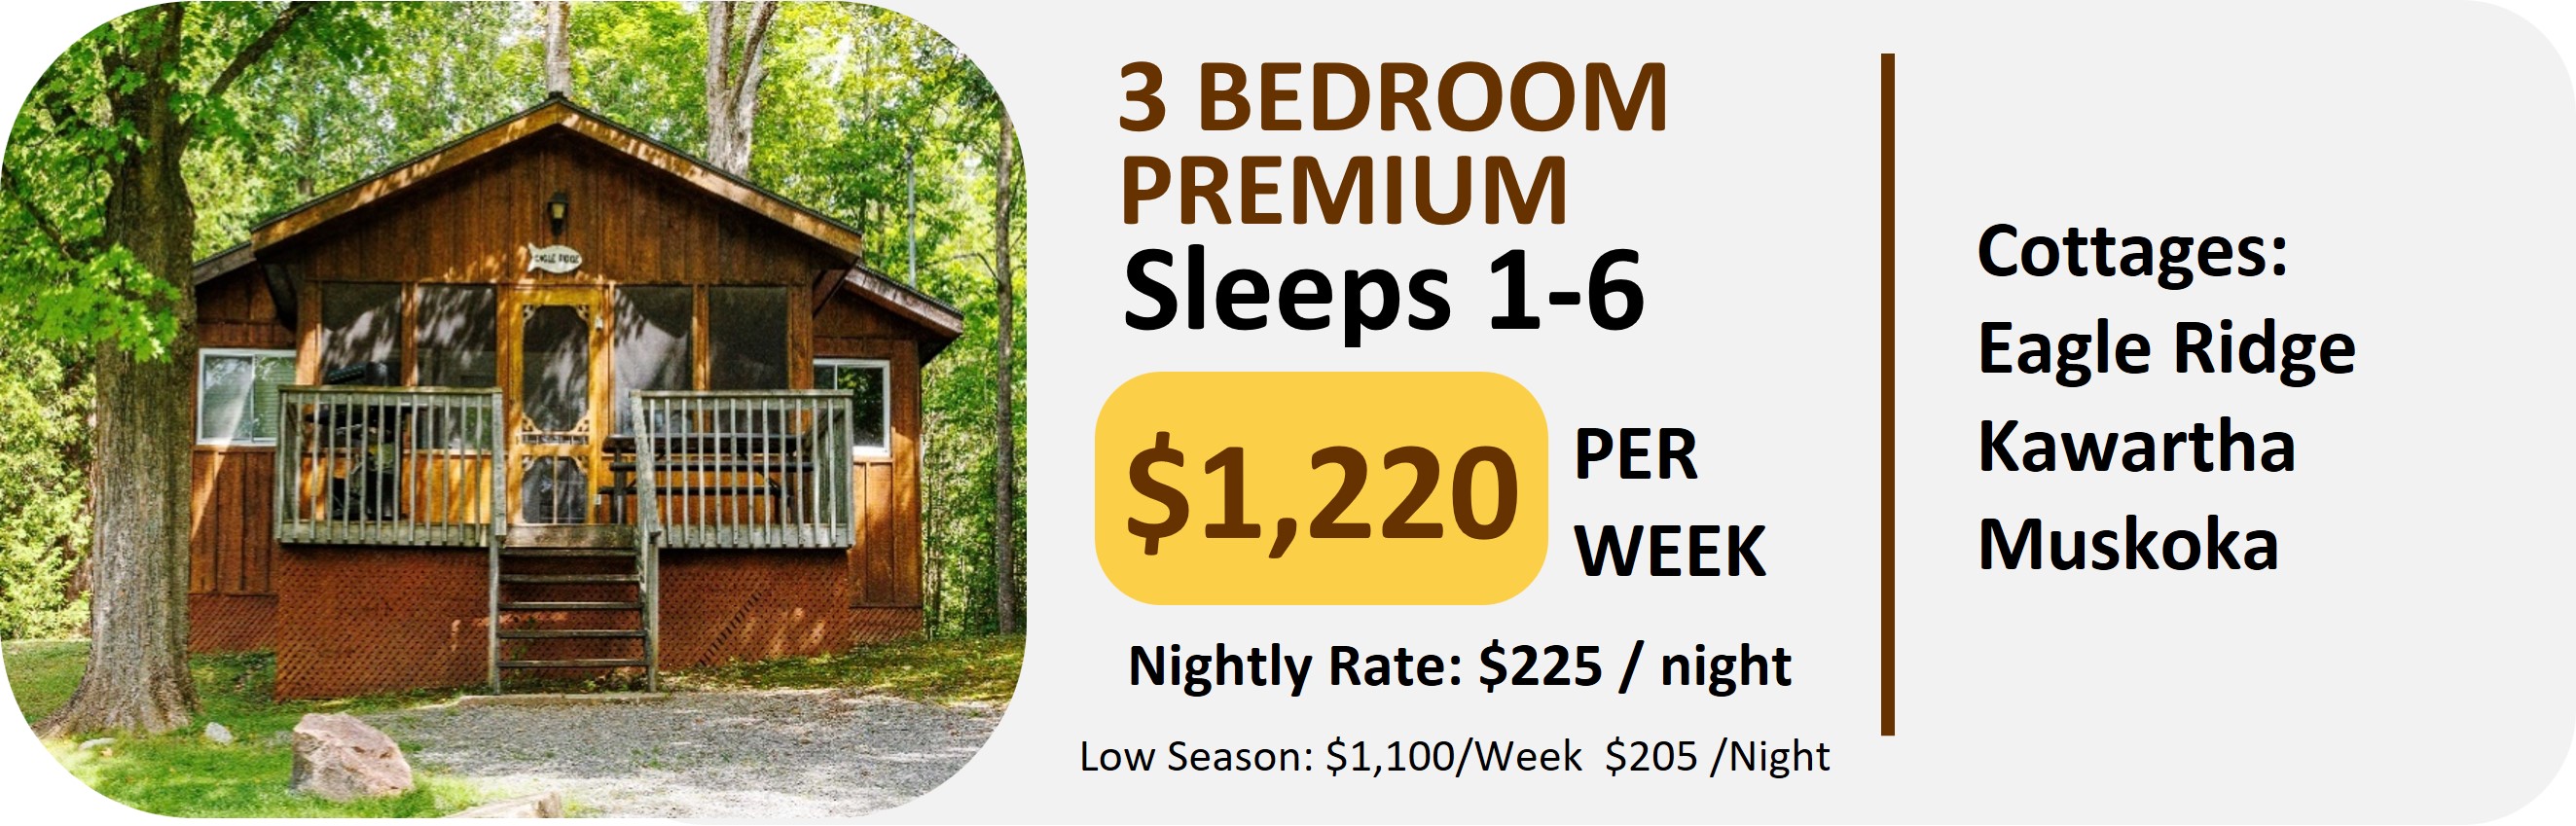 3 Bedroom Premium